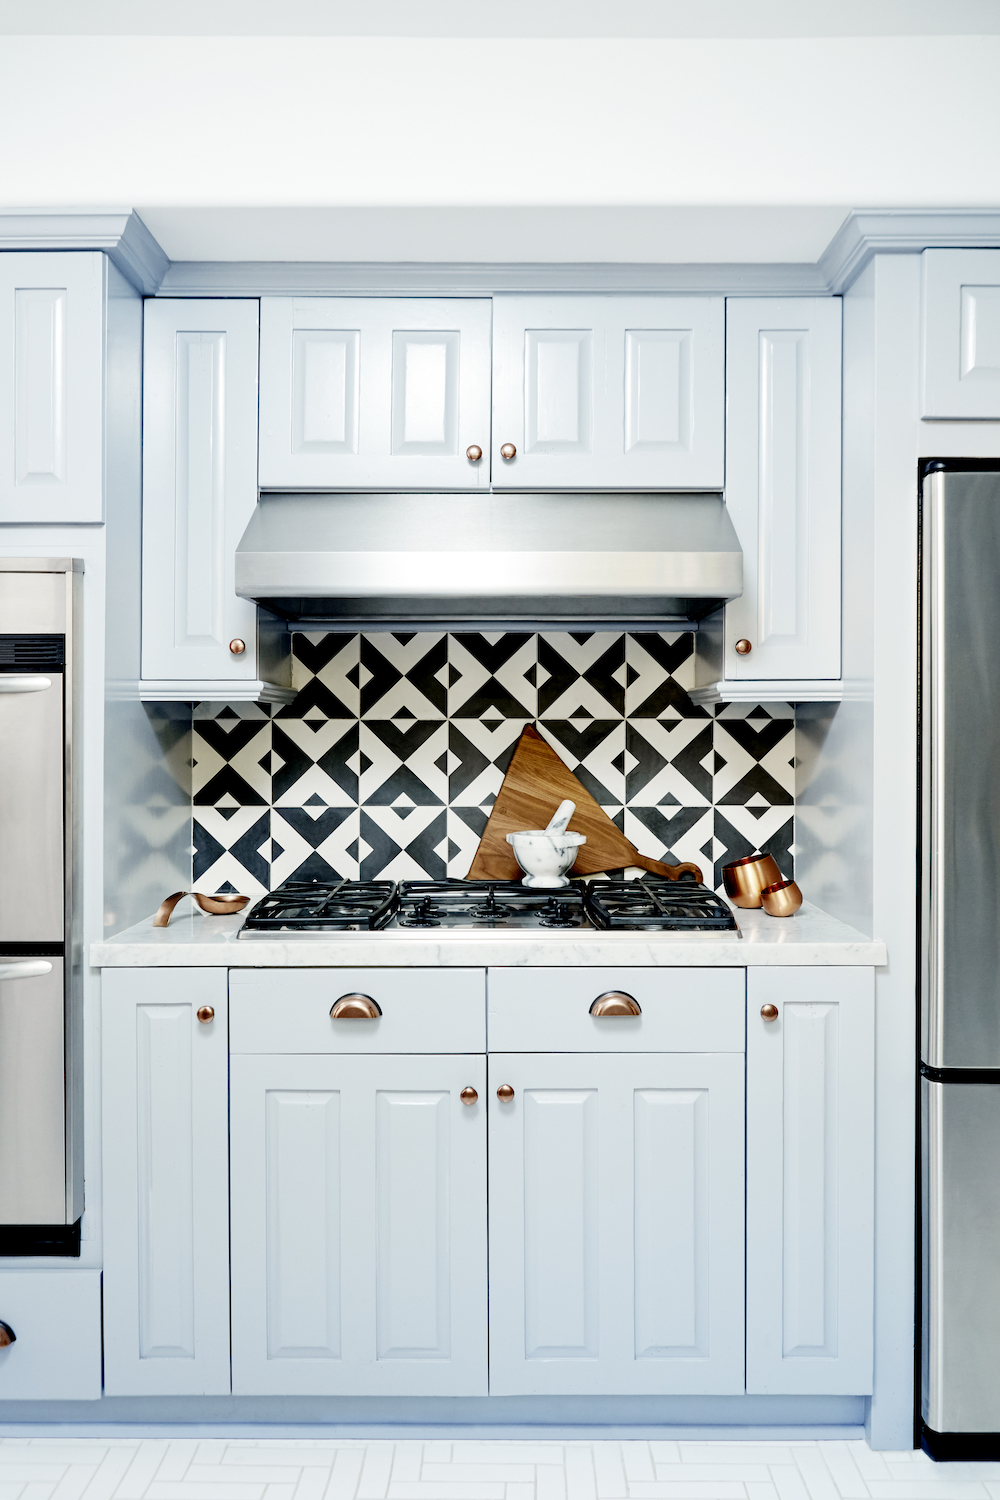 nina dobrei's fun kitchen with black and white tile backsplash and blue cabinet paint